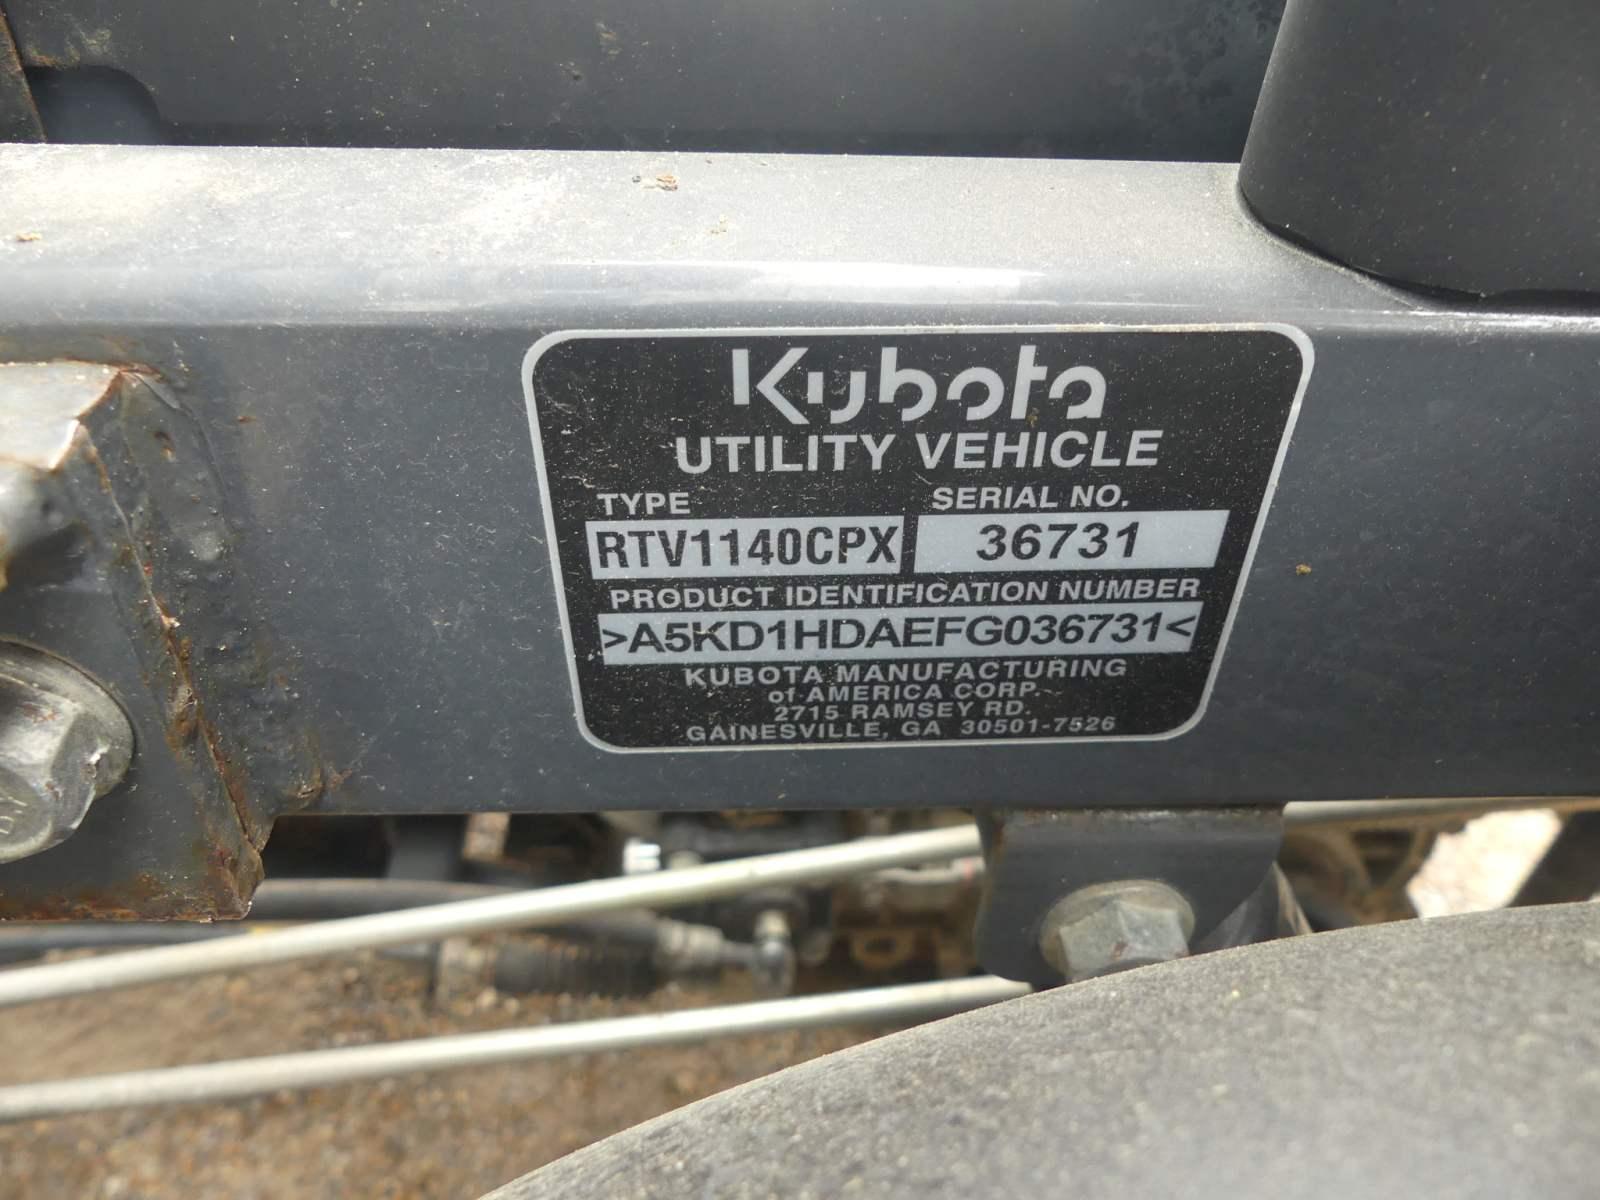 2015 Kubota RTV1140CPX Utility Vehicle, s/n A5KD1HDAEFG036731 (No Title - $